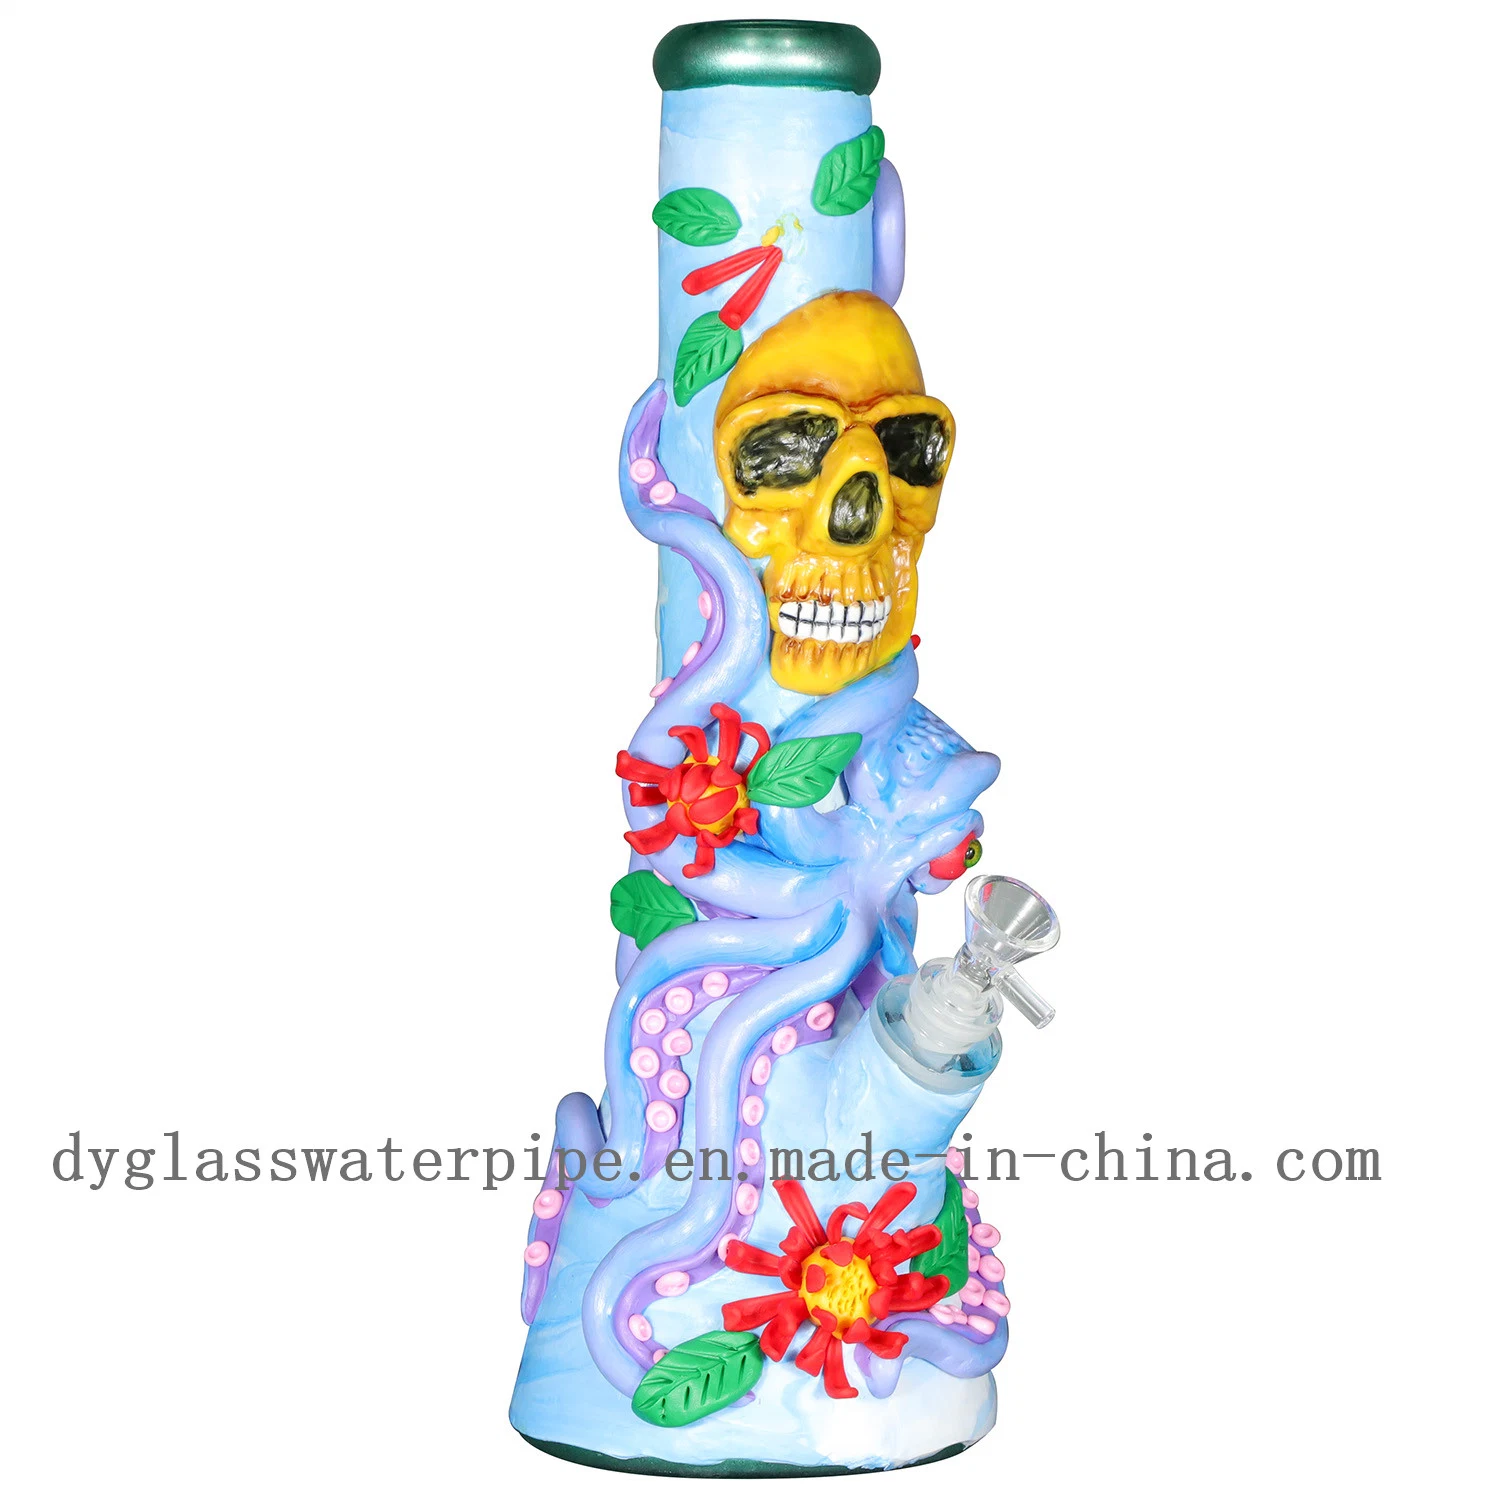 3D Hand-Painted Big Skull Beaker Base Glass Water Pipes